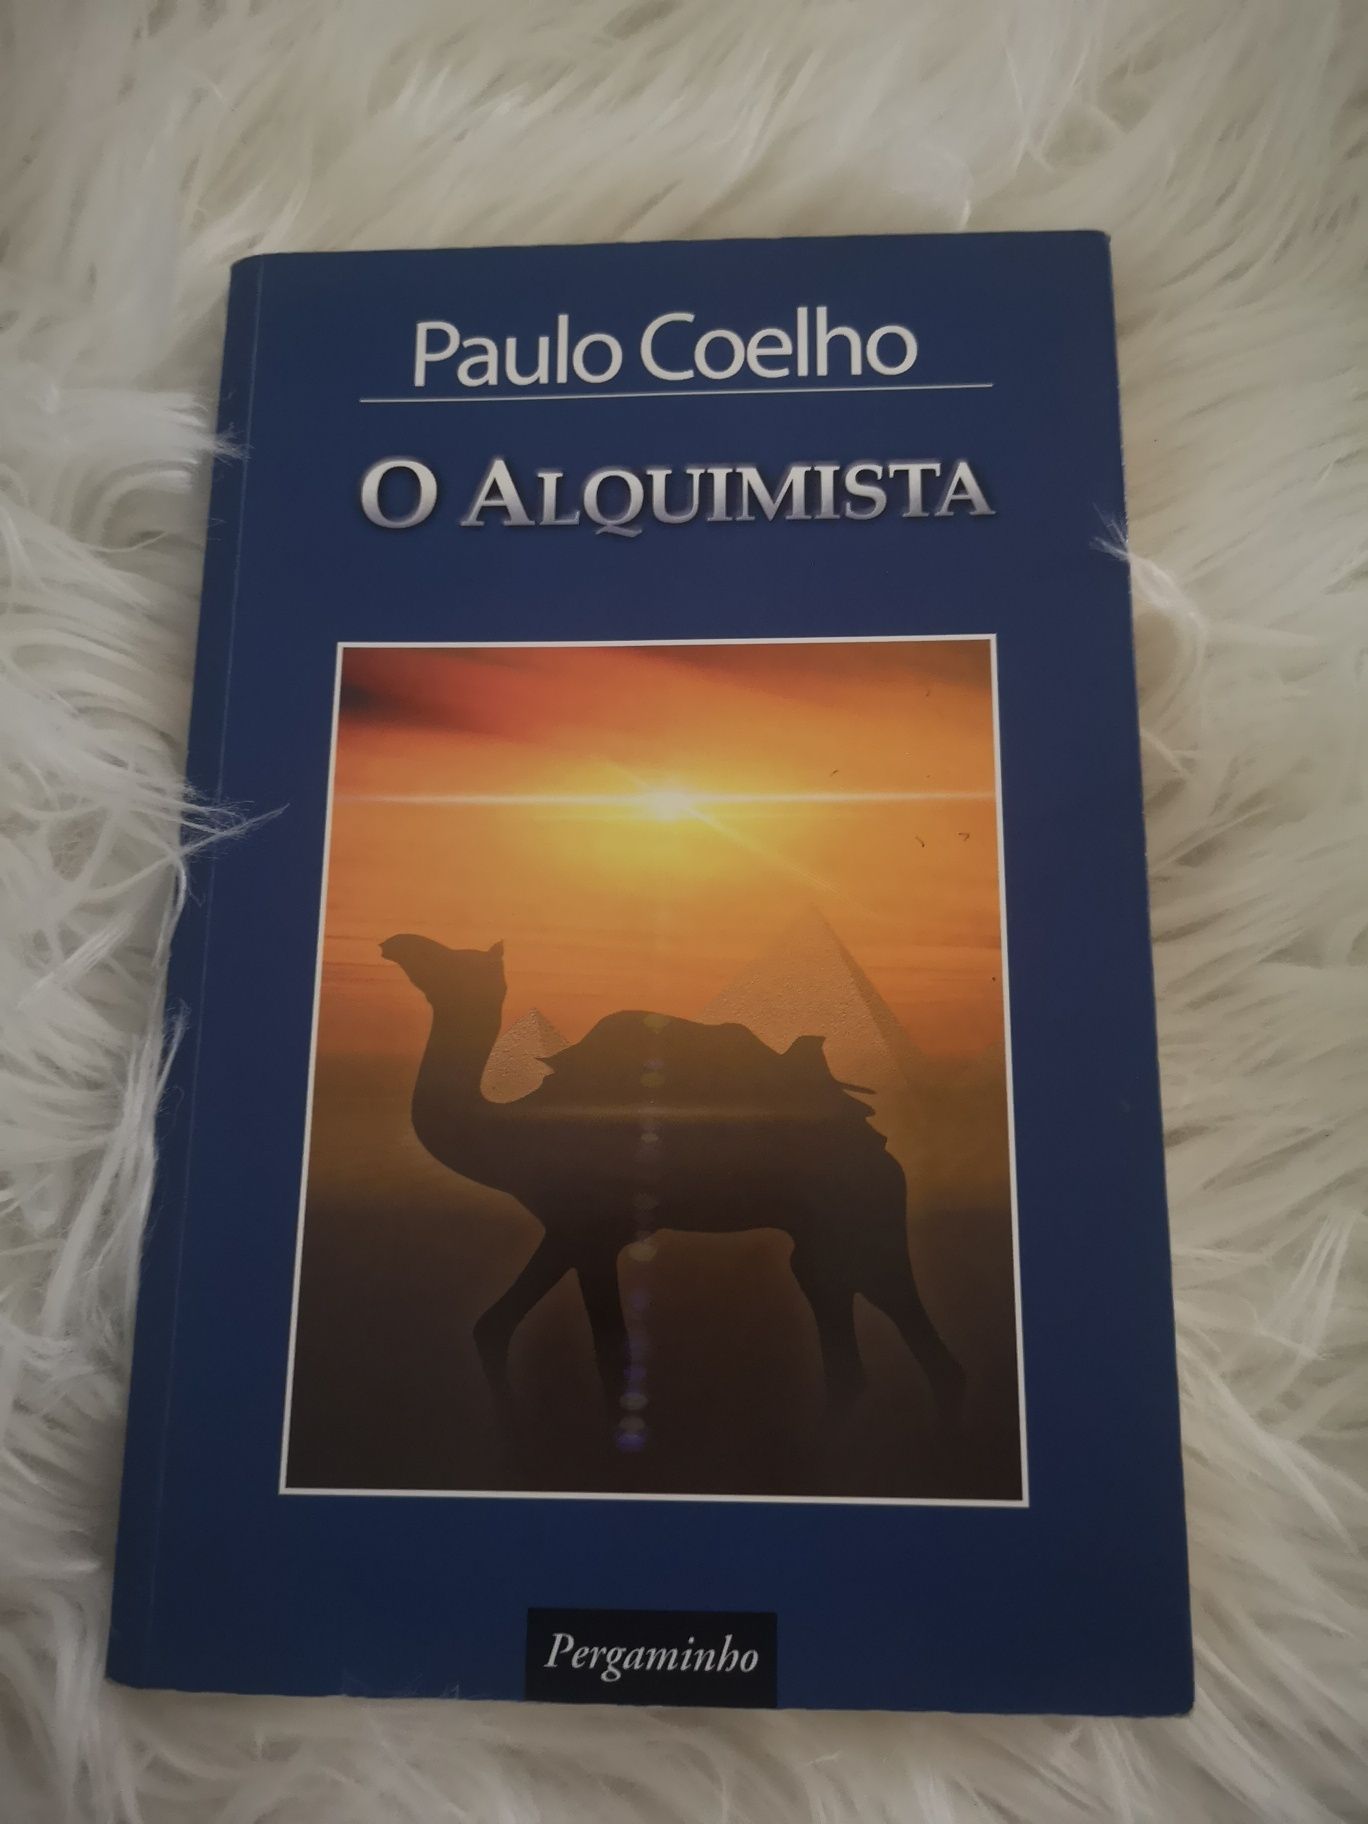 Paulo Coelho - Alquimista